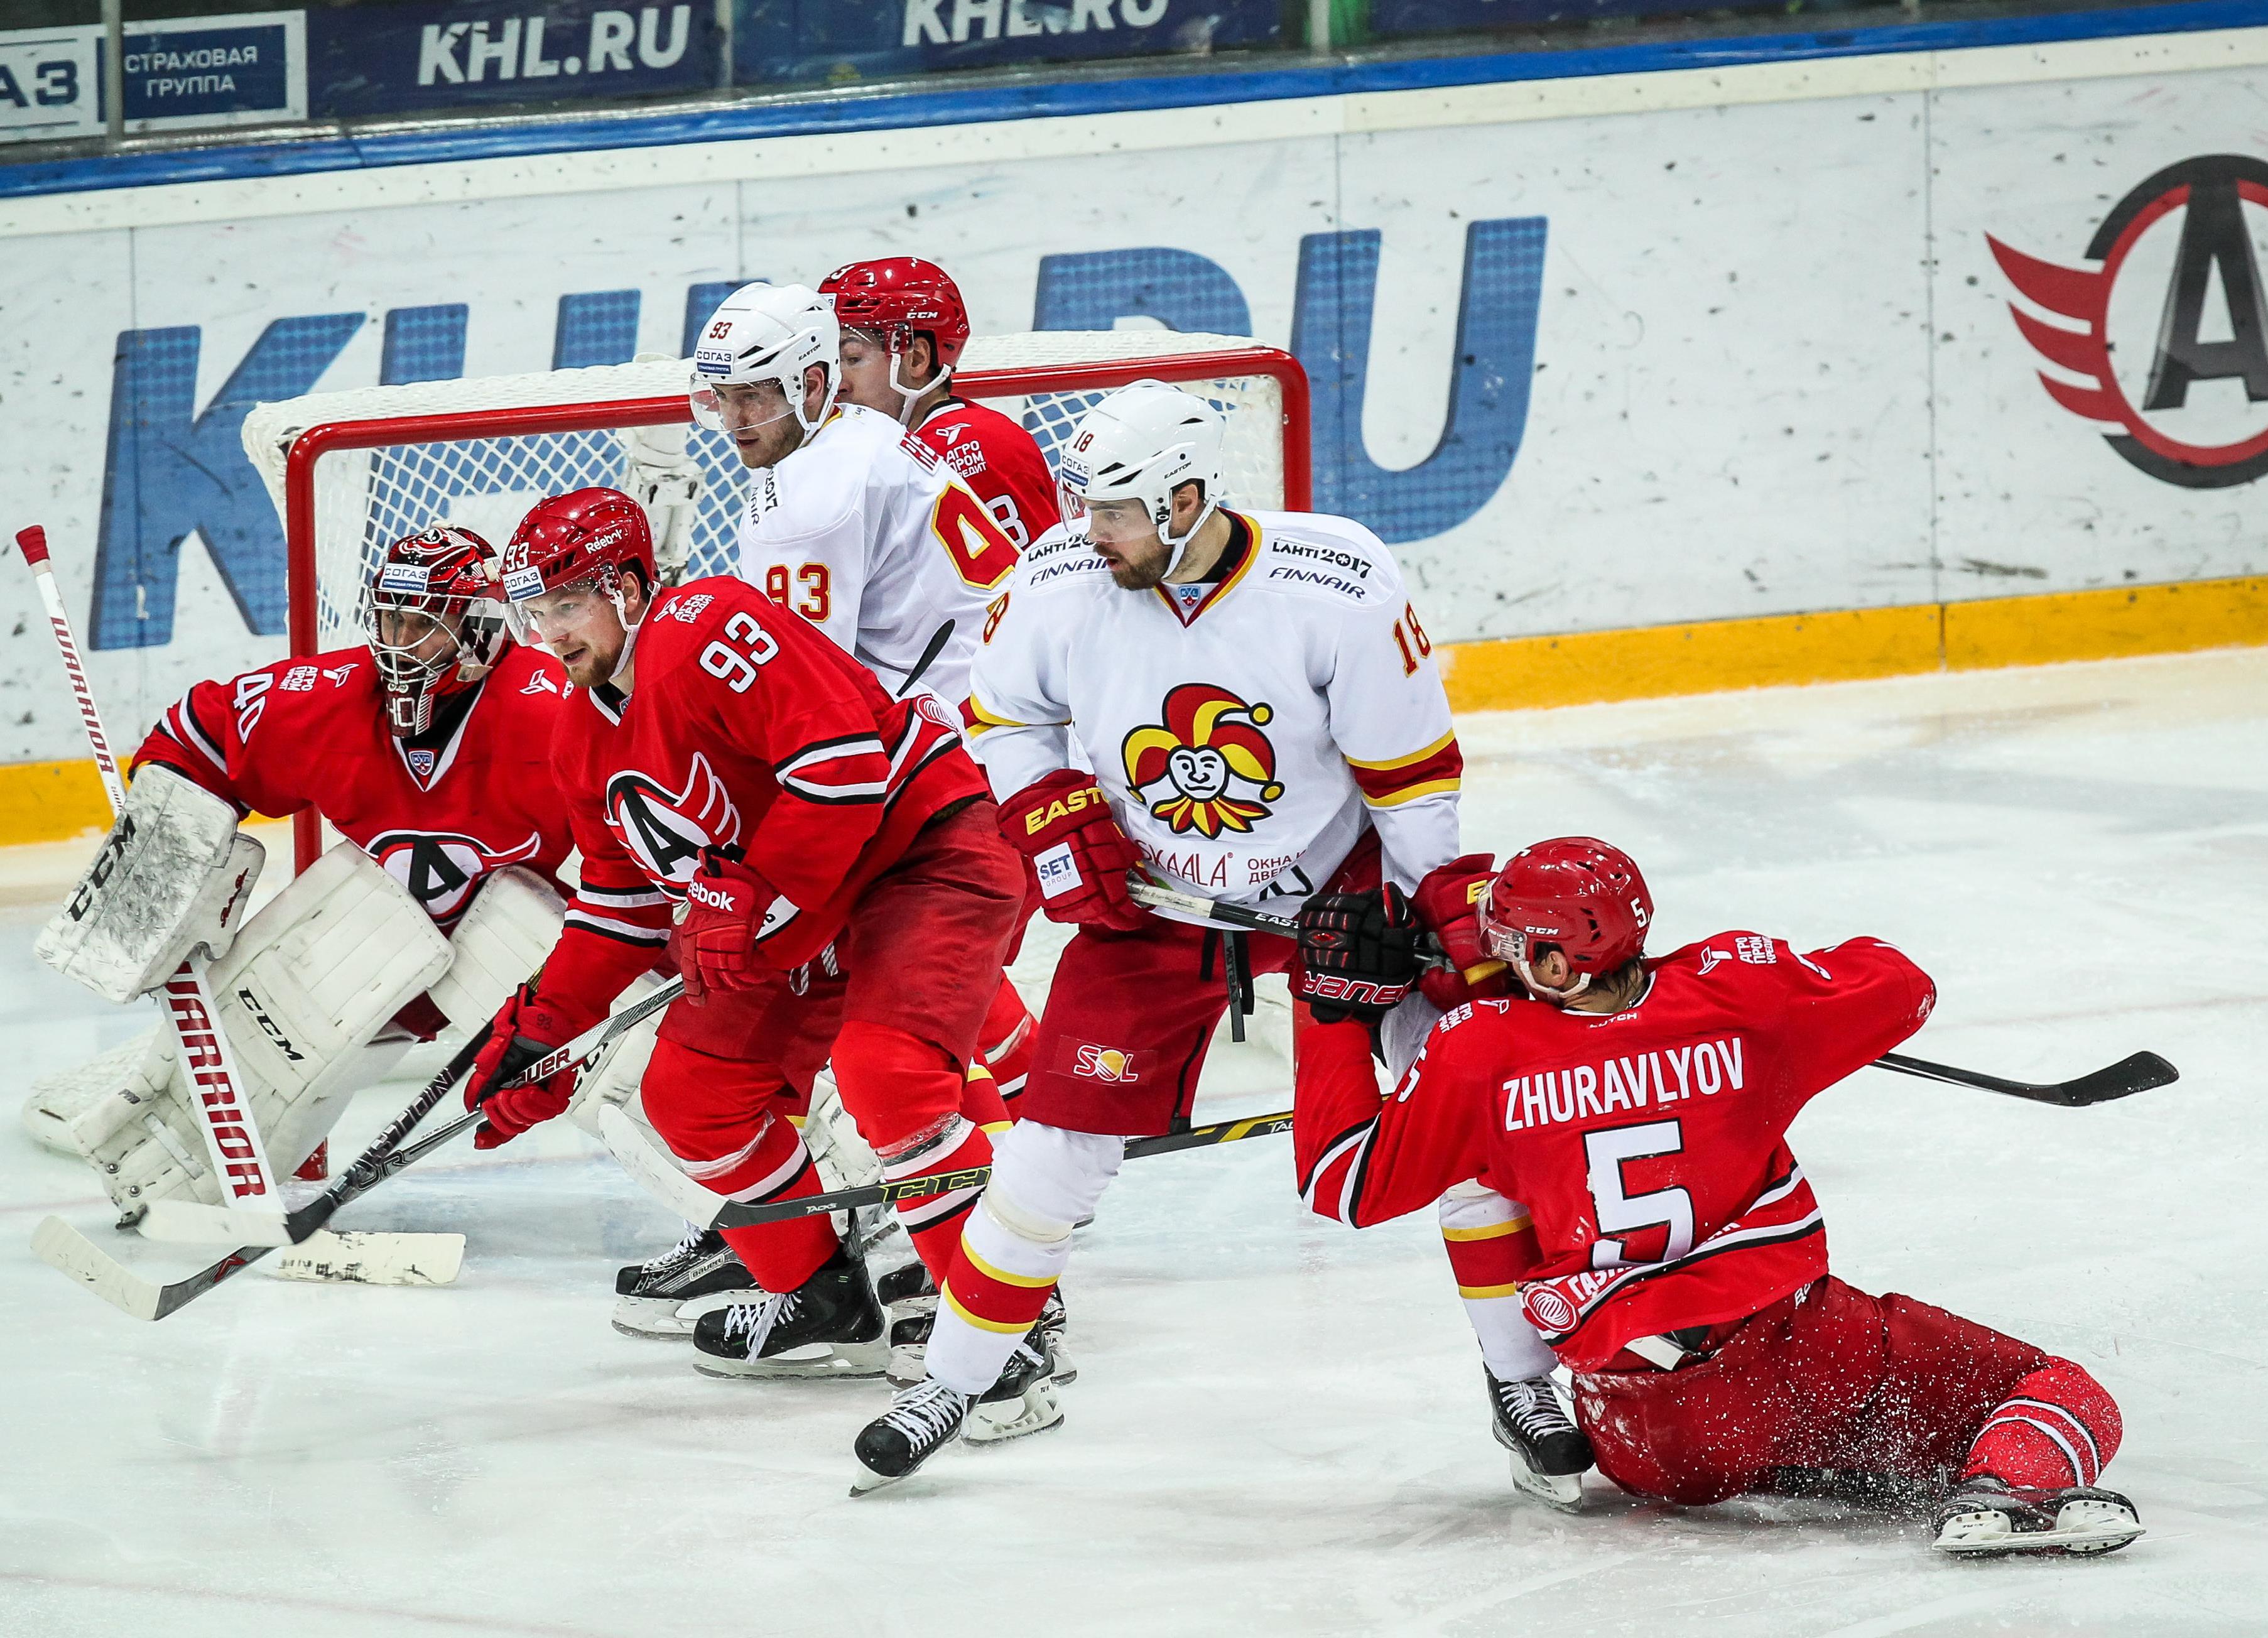 KHL: Jokerit Helsinki stoppt wegen Coronavirus – Sven Andrighetto mit Saisonende